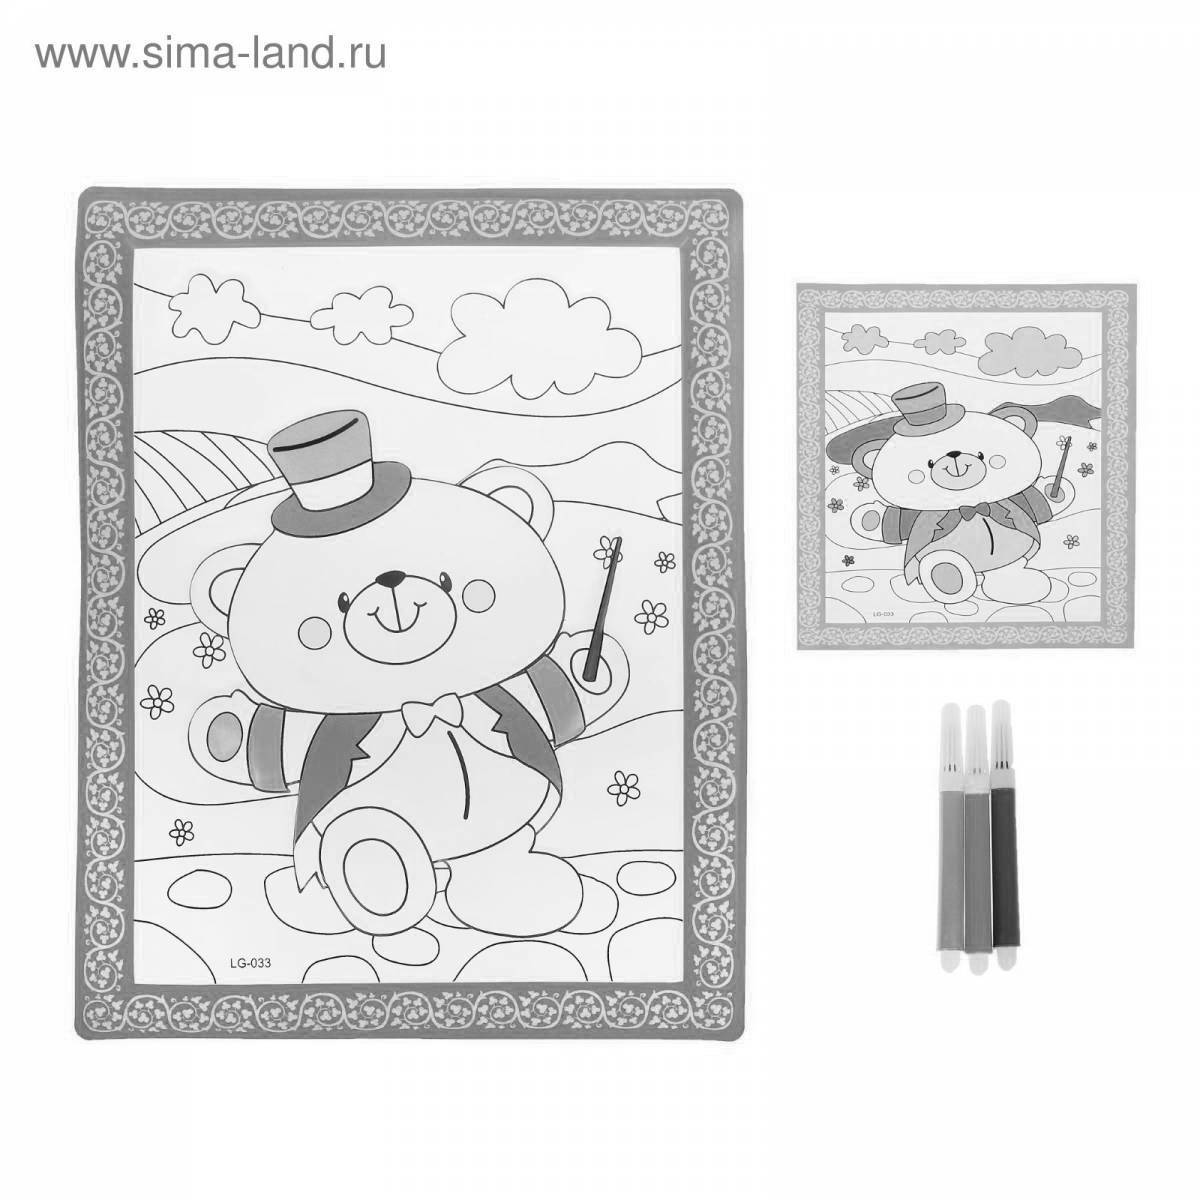 Sima land playful coloring page